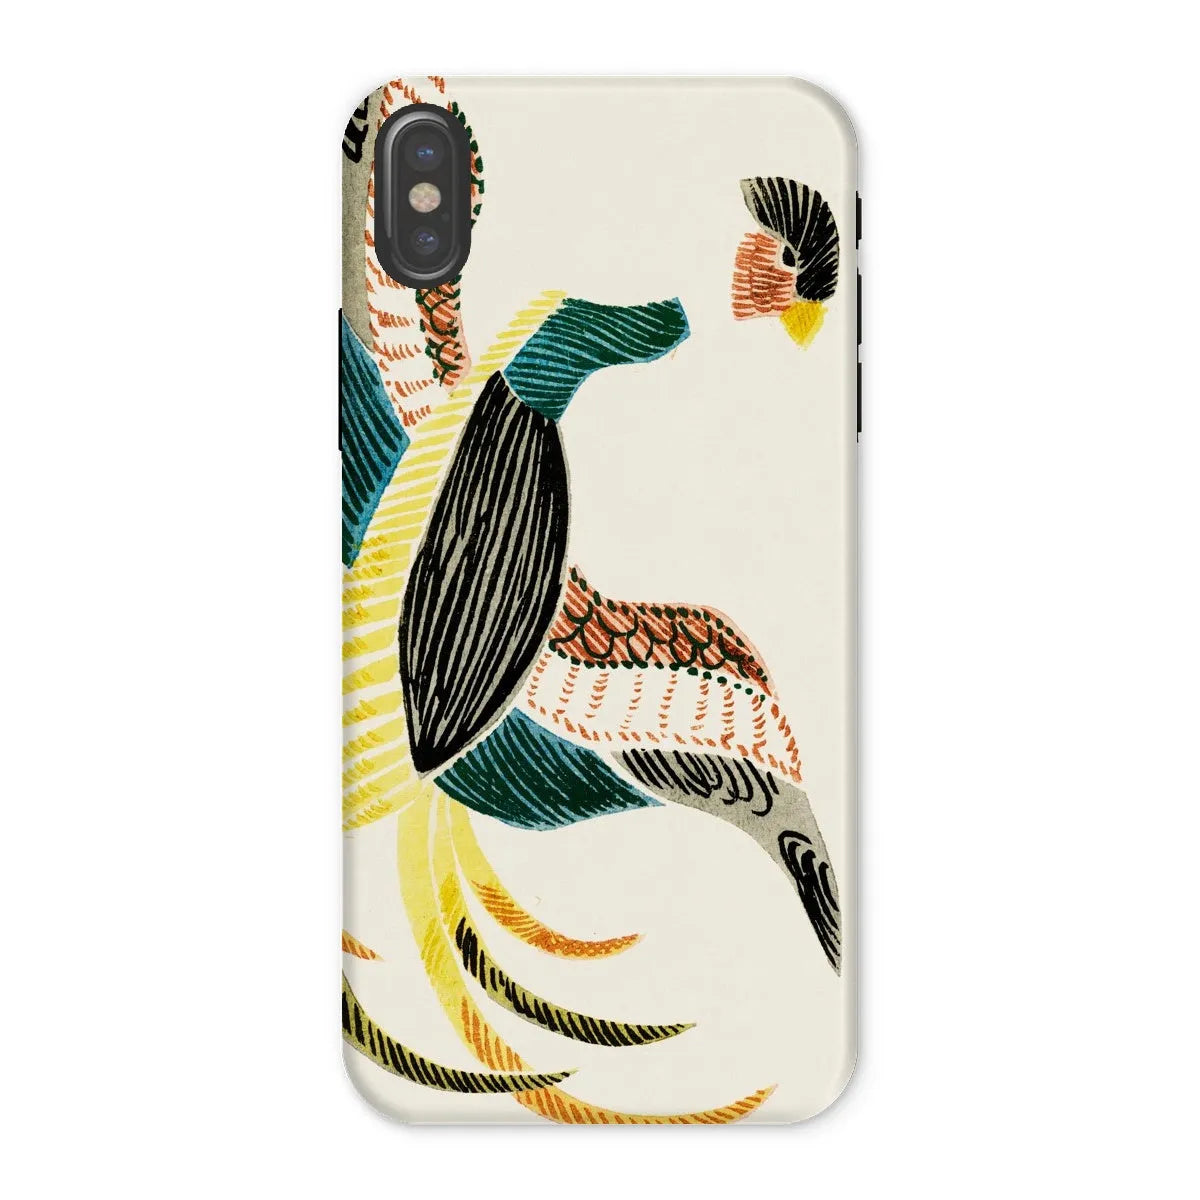 Woodblock Crane - Japanese Bird Phone Case - Taguchi Tomoki - Iphone x / Matte - Mobile Phone Cases - Aesthetic Art